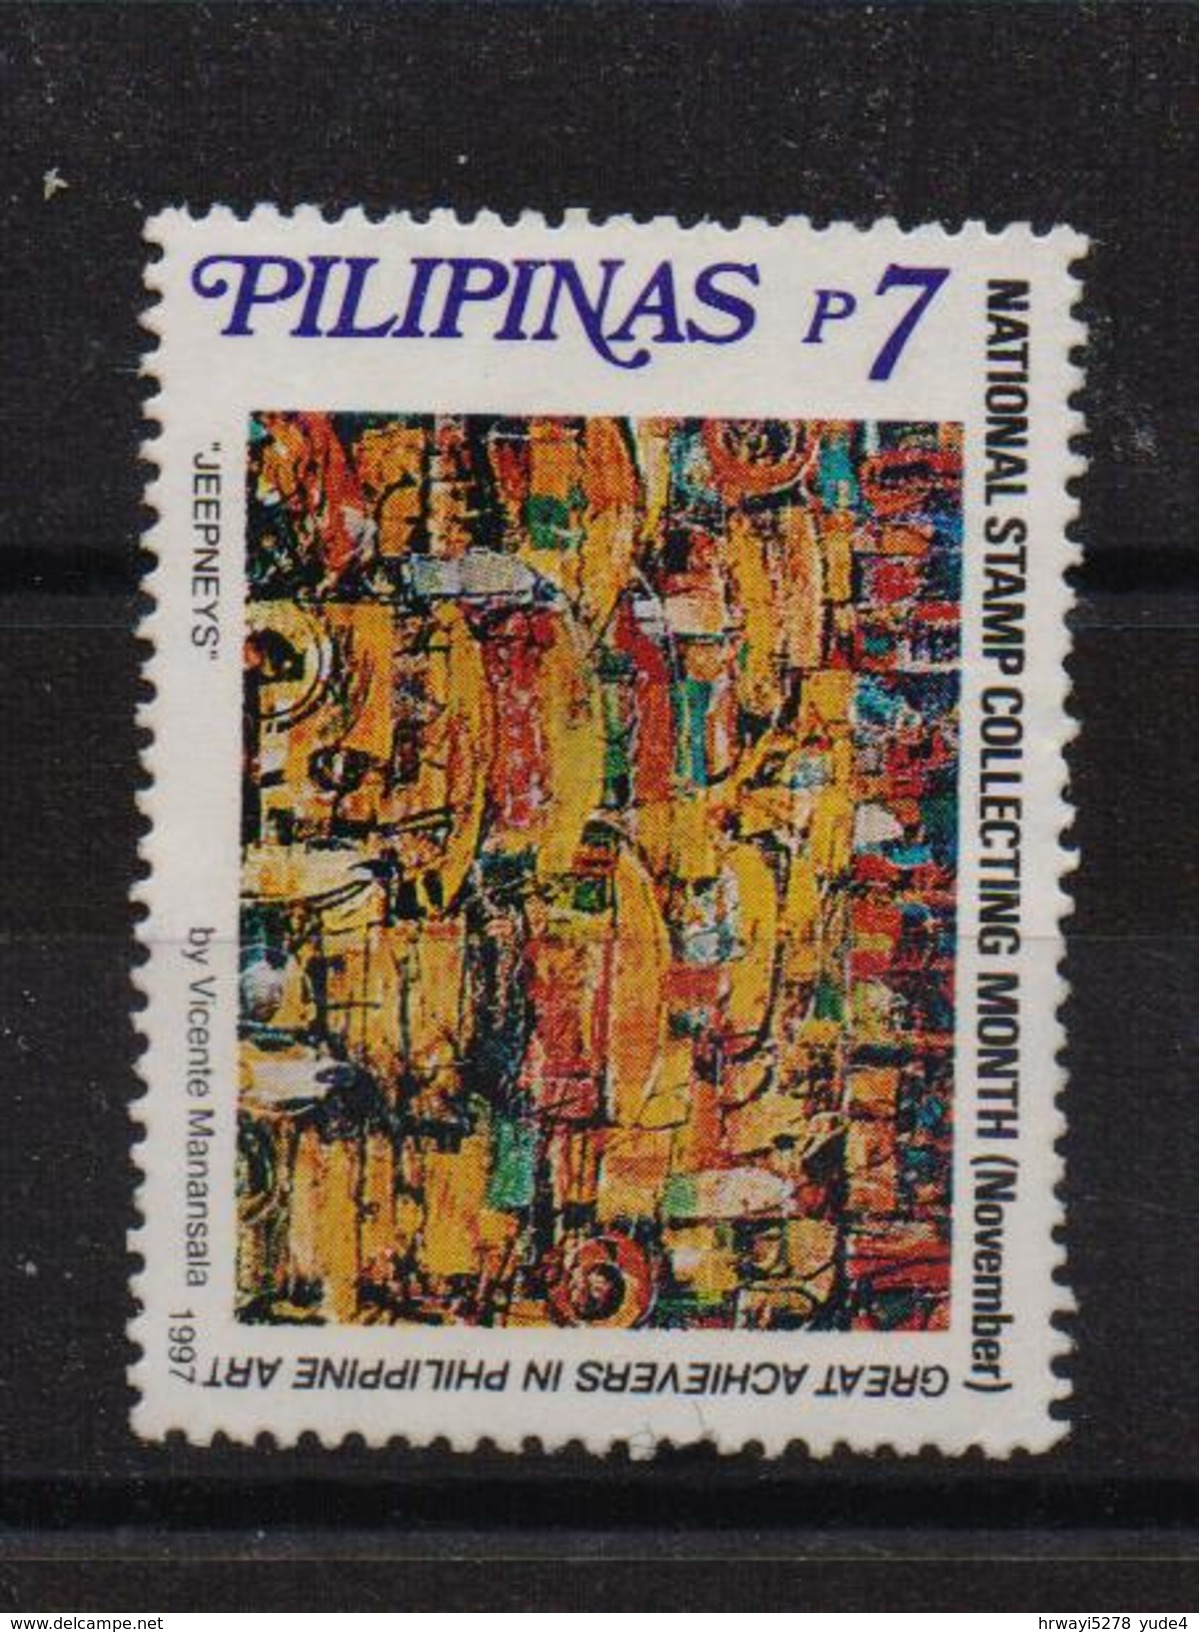 Philippinas 1997, Minr 2838, Vfu - Filippine